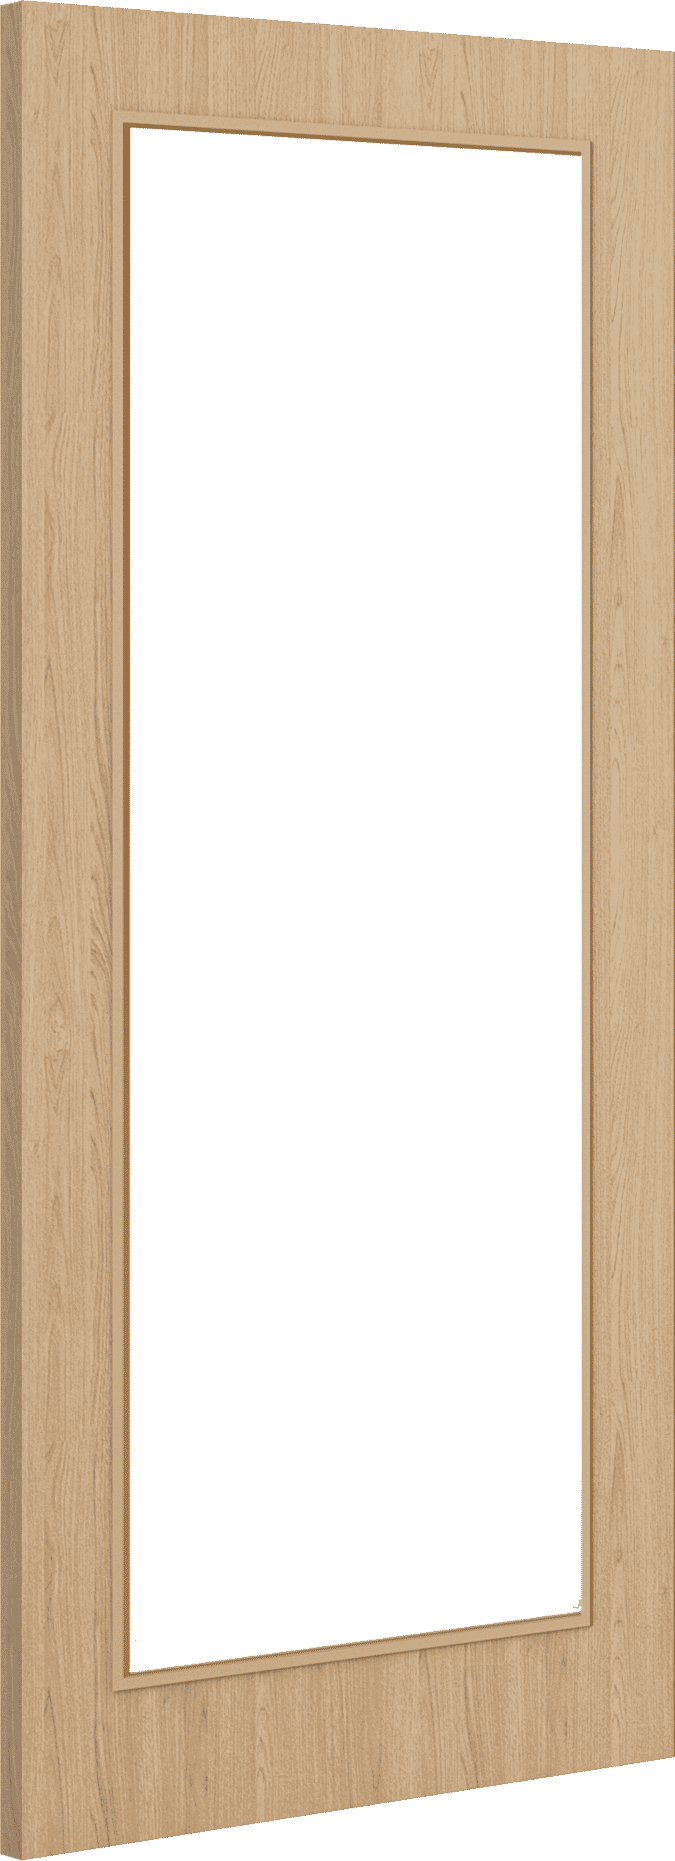 2040mm x 526mm x 44mm Architectural Oak 05 Frosted Glazed - Prefinished FD30 Fire Door Blank